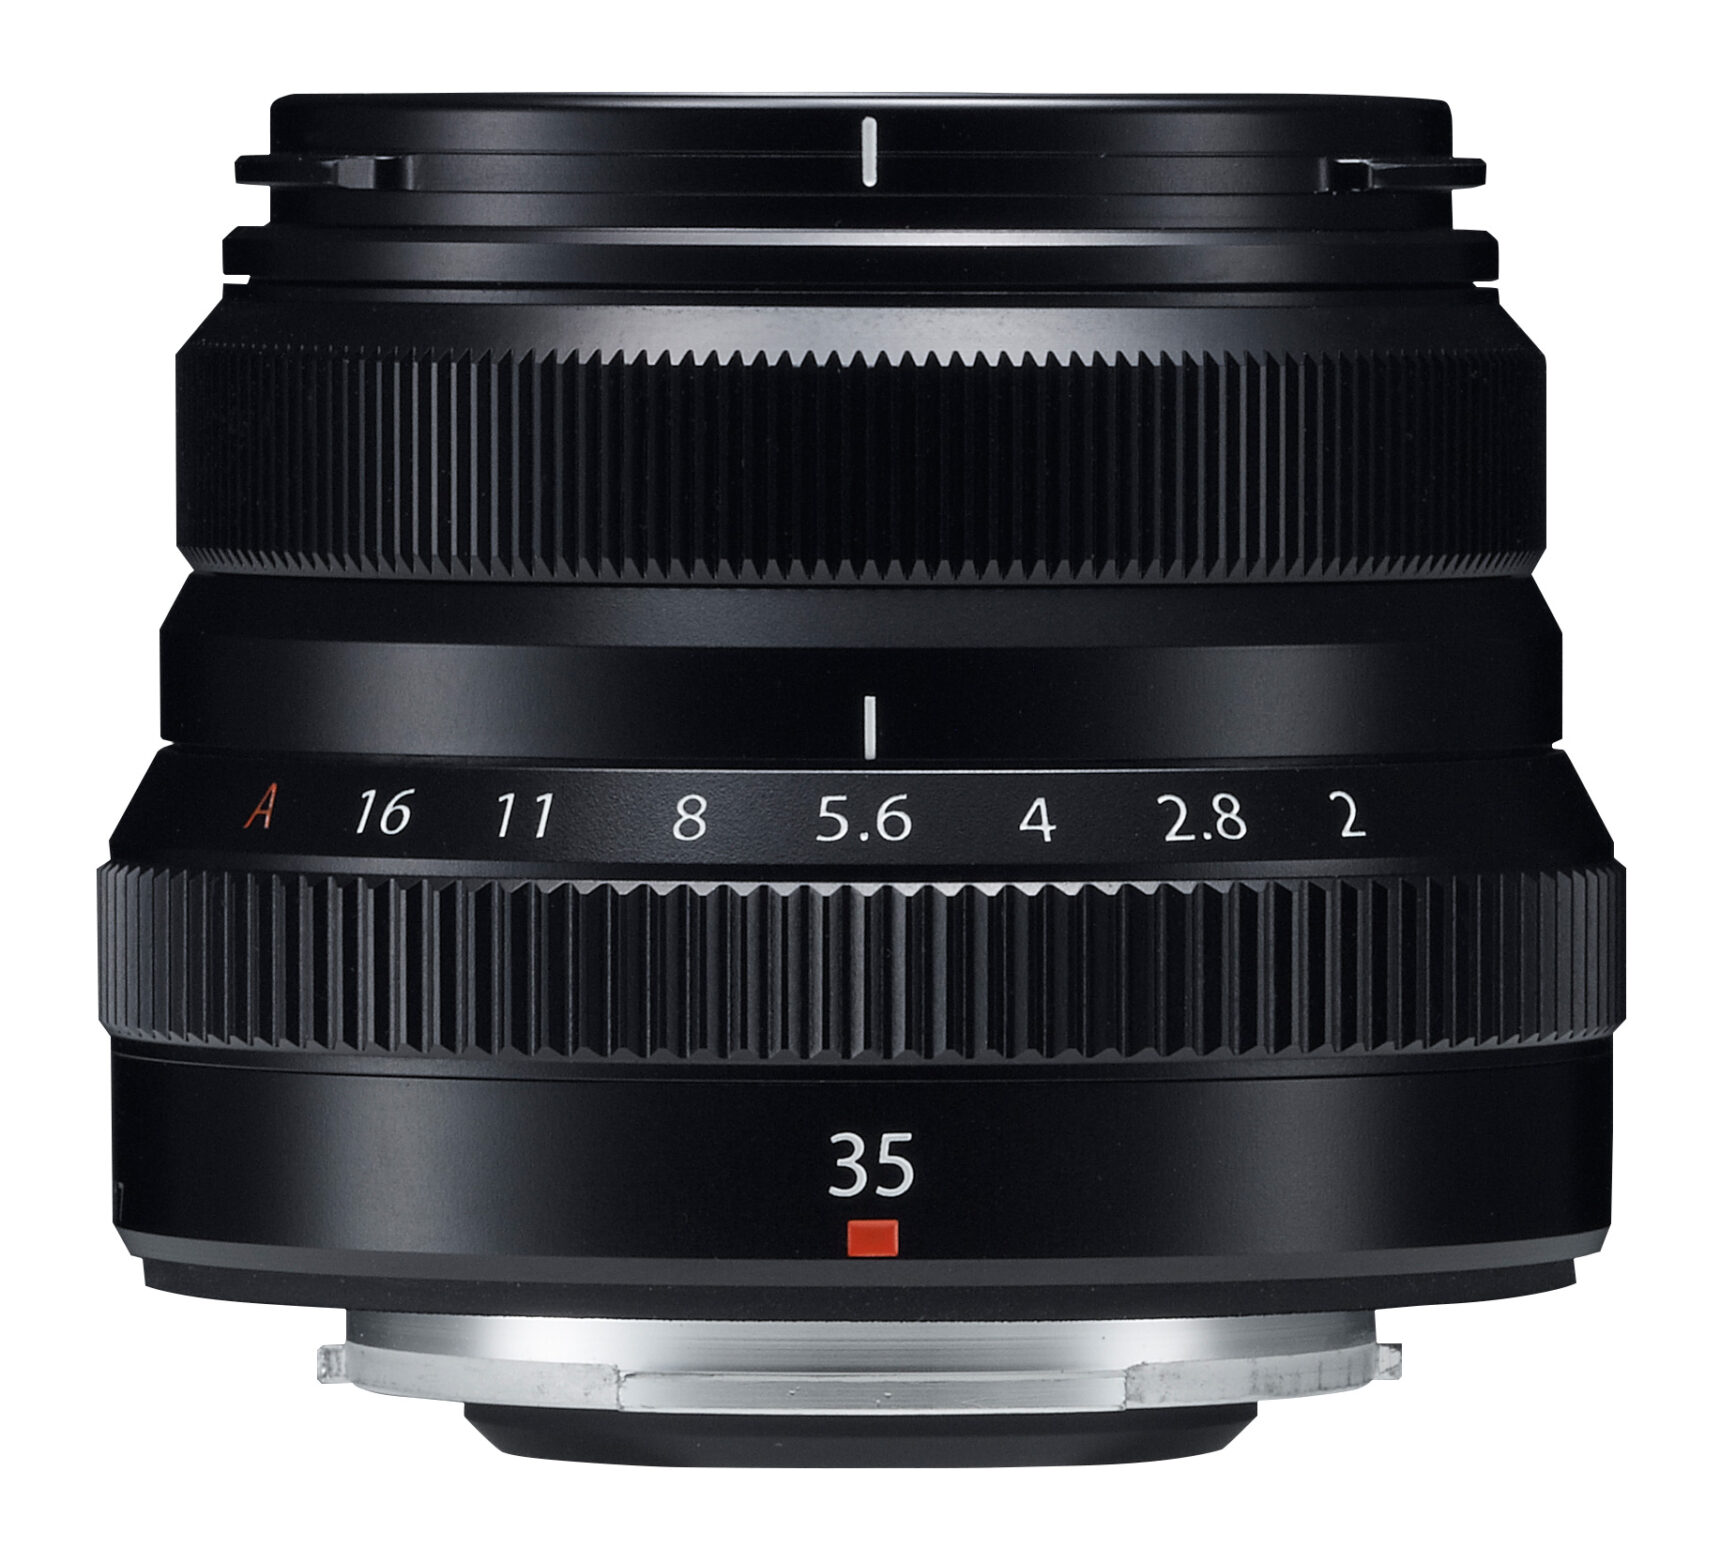 Fuji XF 35mm f2 WR Compact Prime Lens